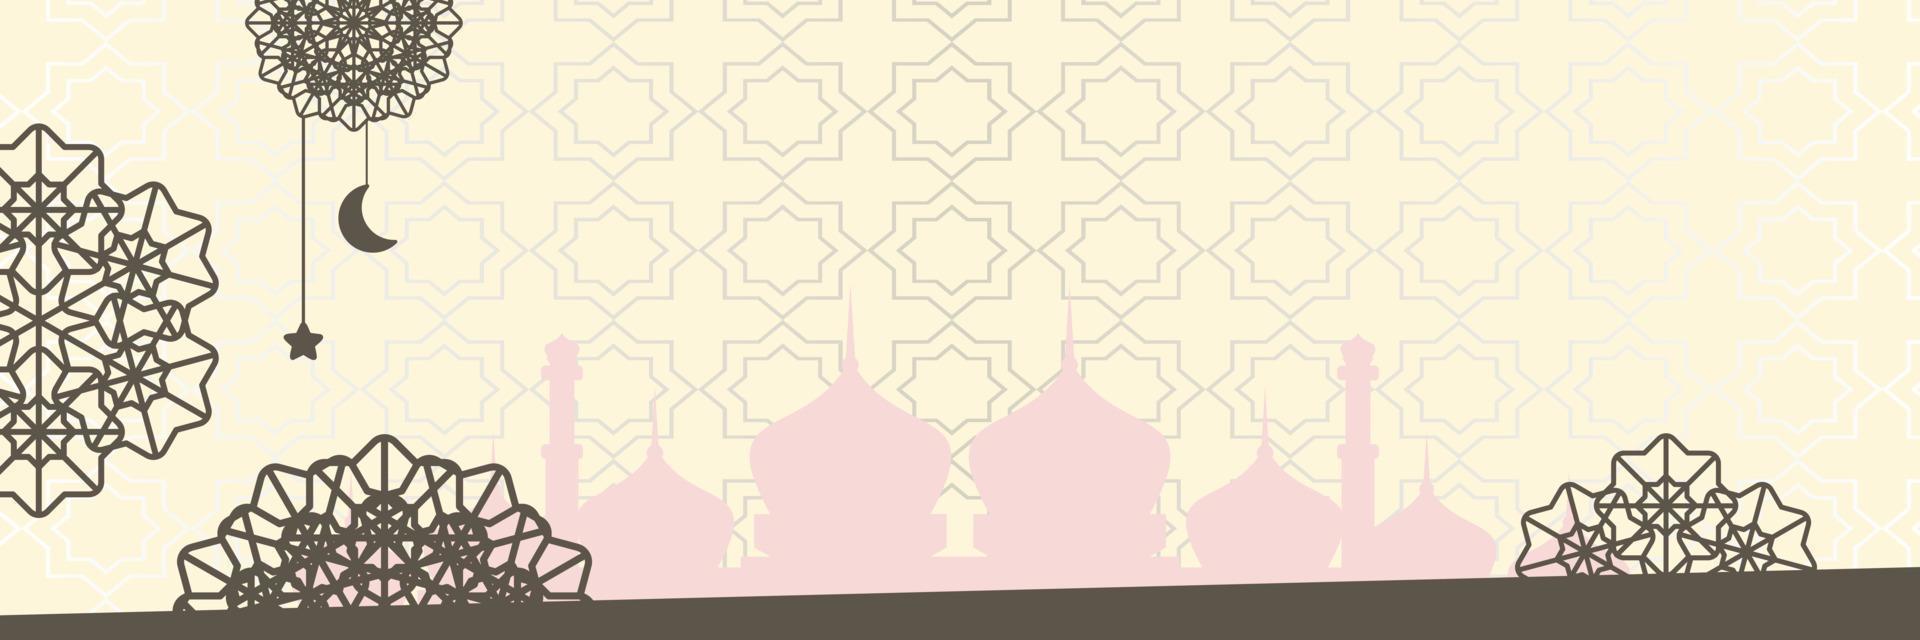 Islamic background, with beautiful mandala ornament. vector template for banners, greeting cards for Islamic holidays, eid al fitr, ramadhan, eid al adha